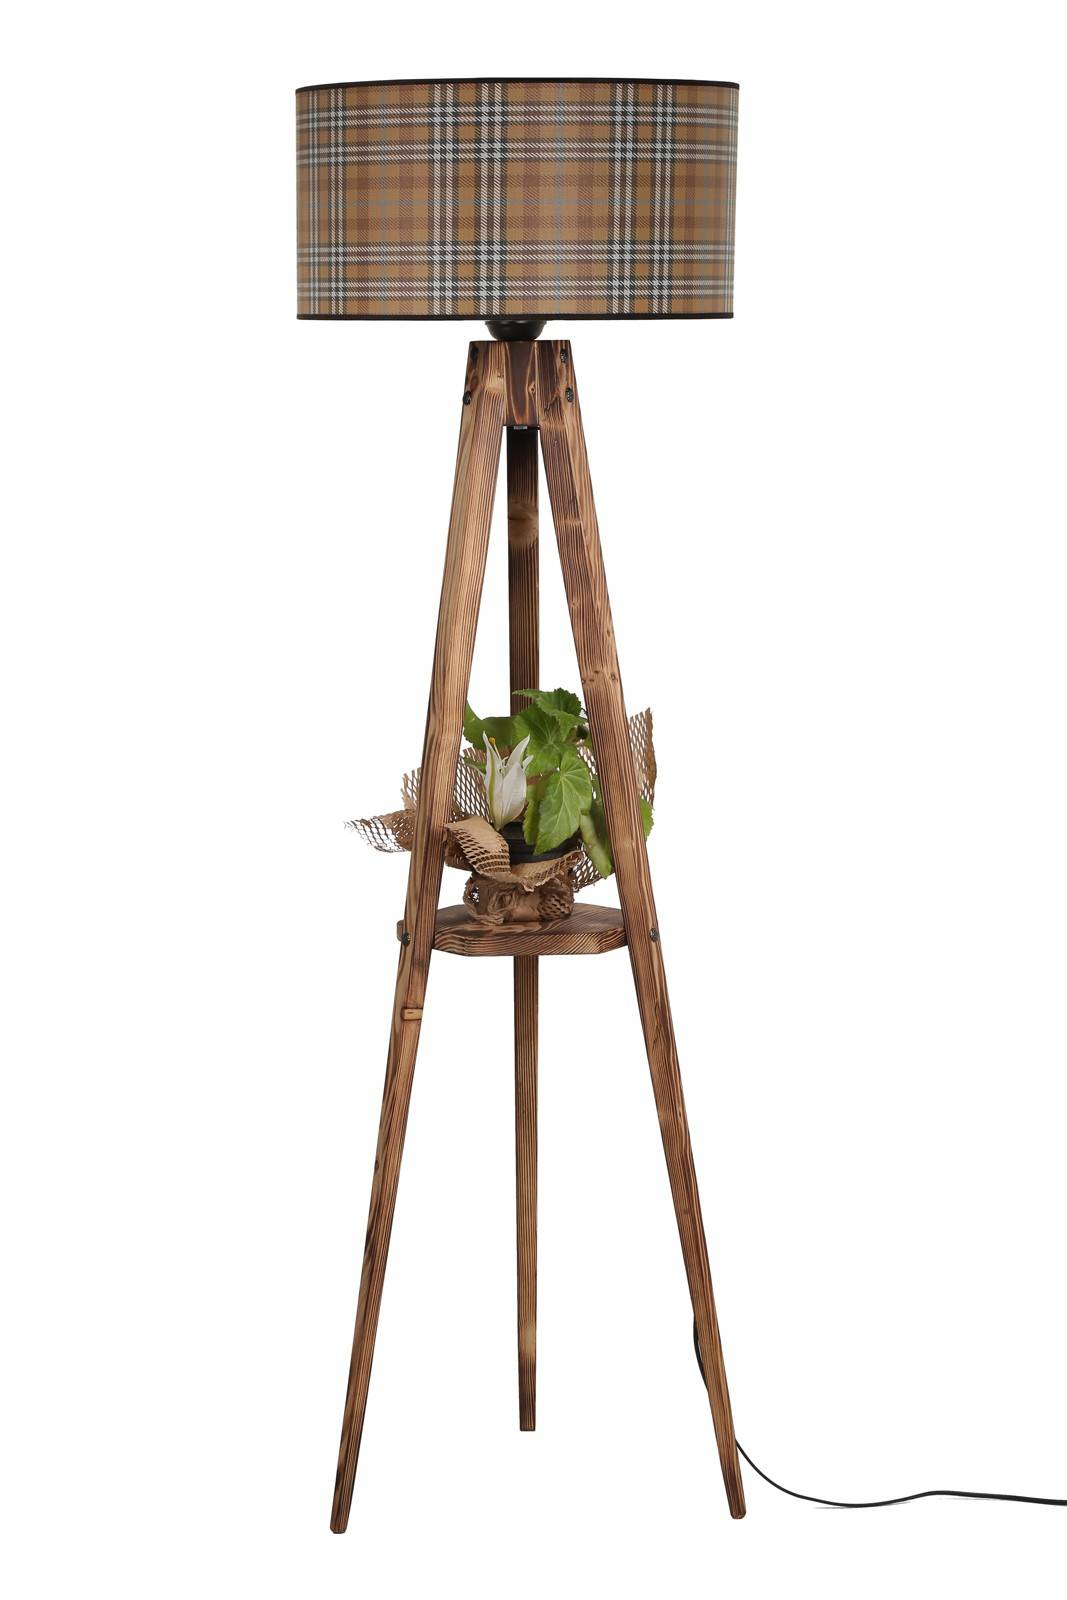 Bedlampje met polygoon plankje en tweed kap Iunctura H165 cm Hout Stof Bruin Multicolour